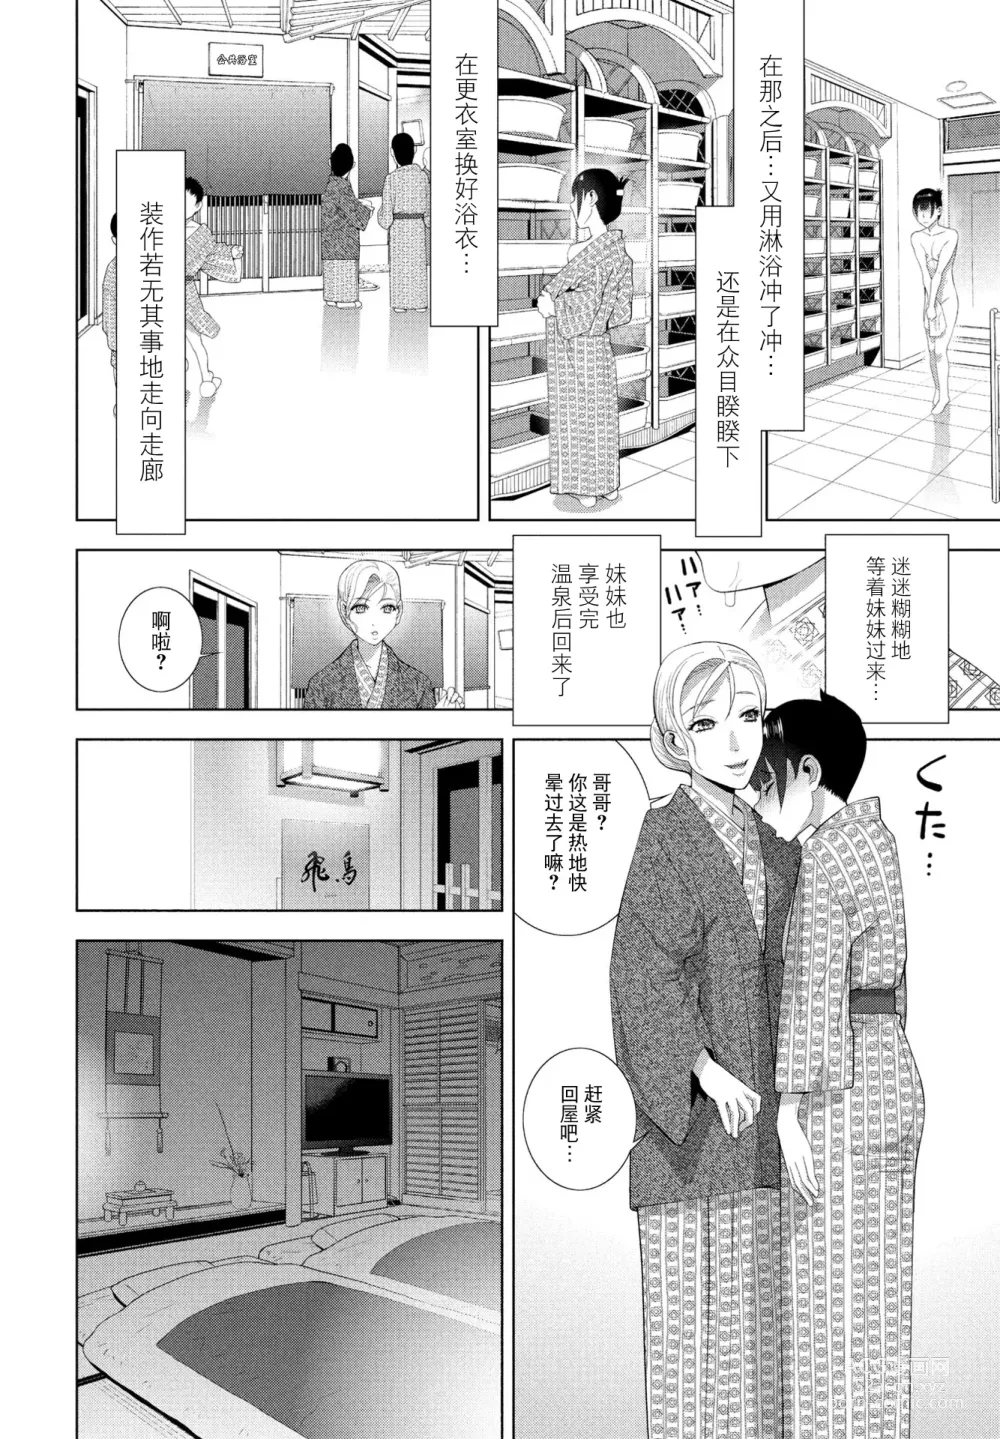 Page 14 of manga Imouto to Ani no Onsen Jijou